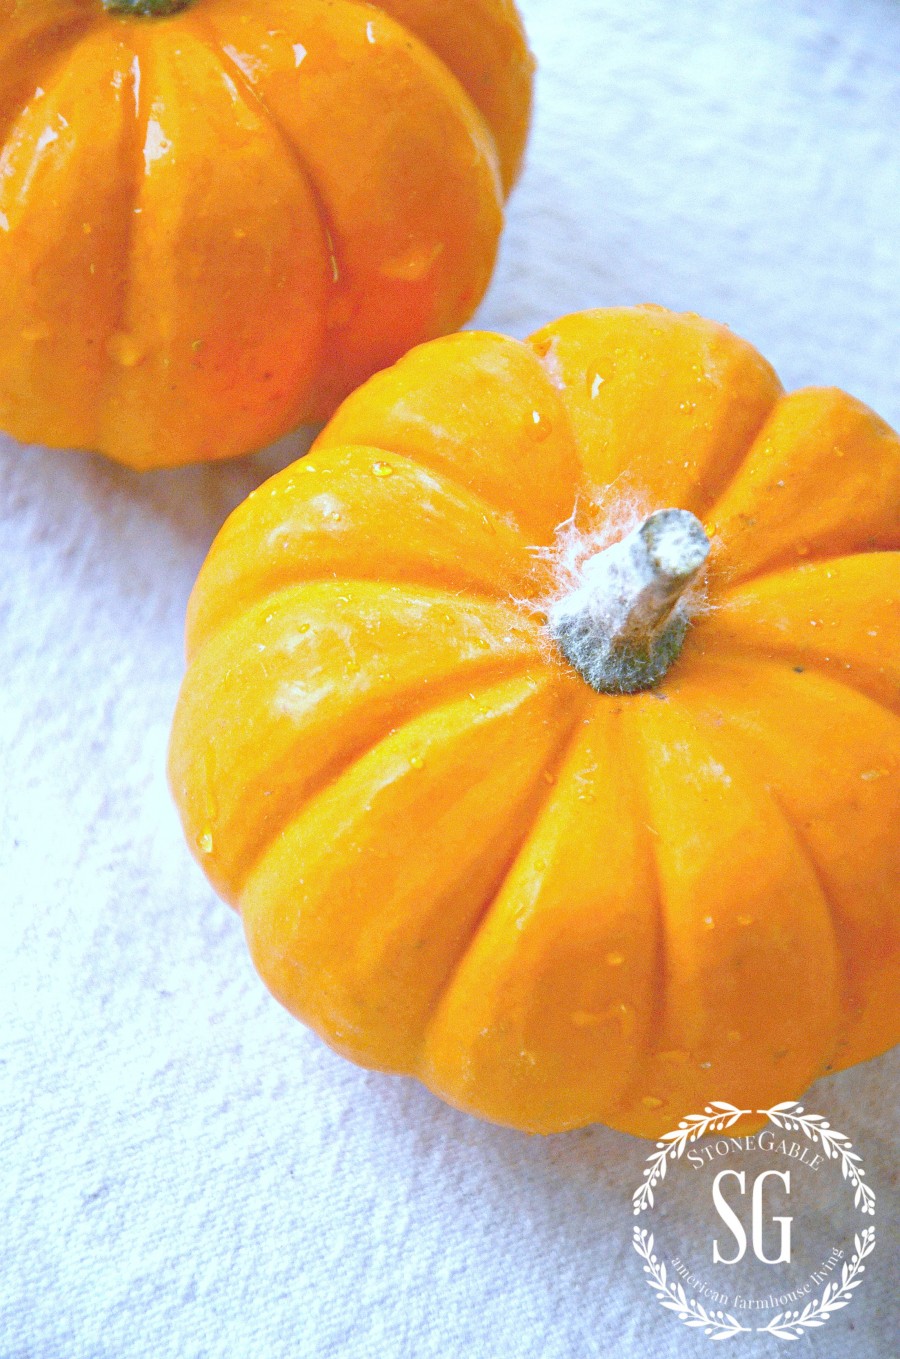 KEEPING PUMPKINS FRESH- Easy tips for keeping pumpkins looking great longer-stonegableblog.com